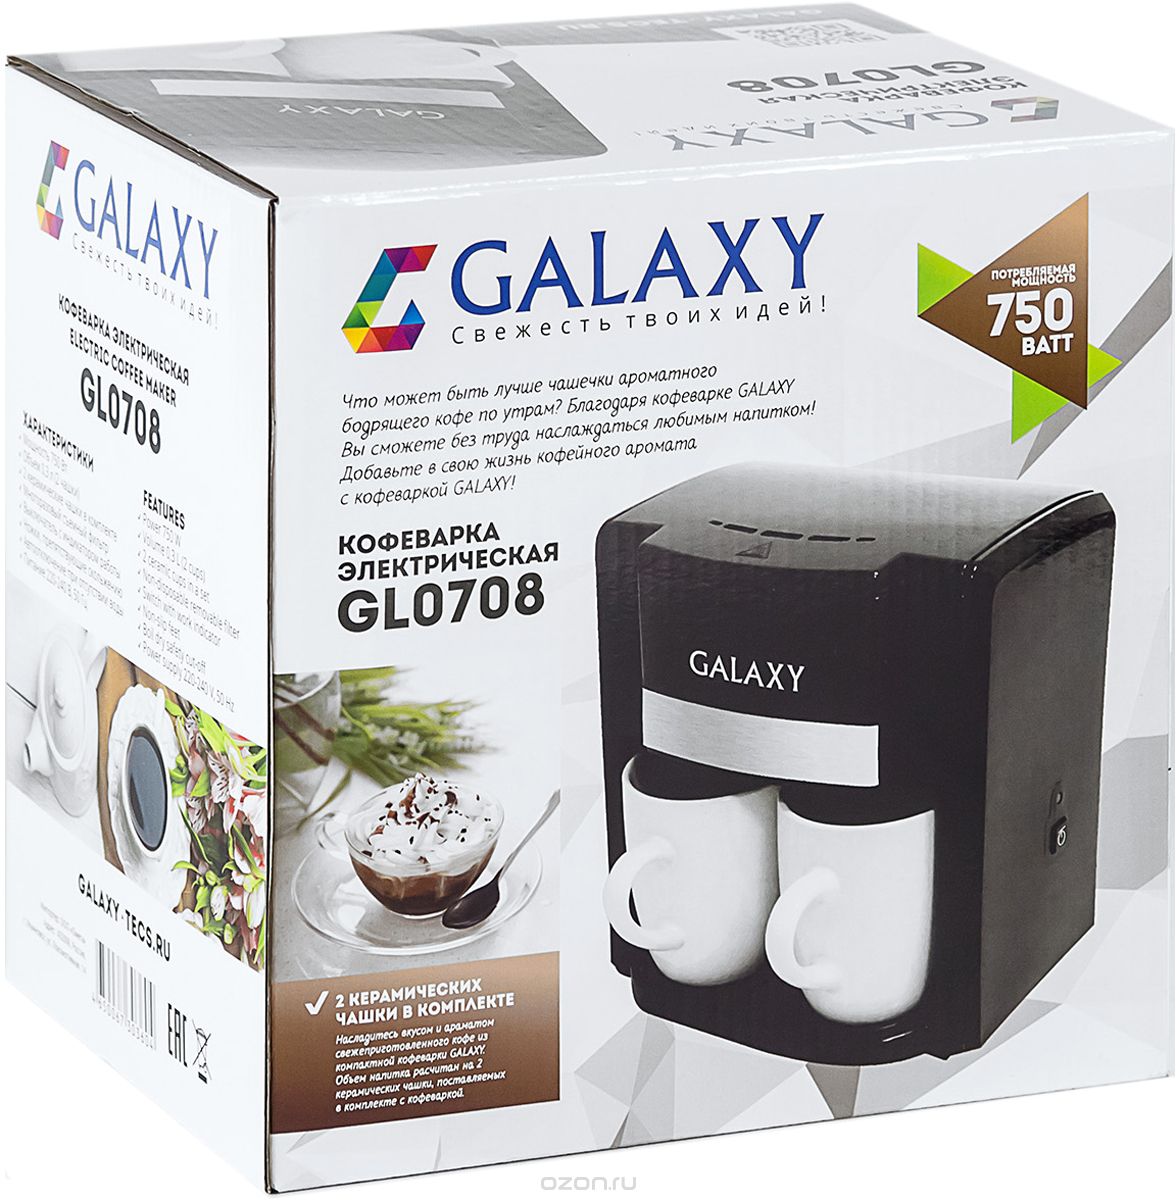   Galaxy GL 0708, Black